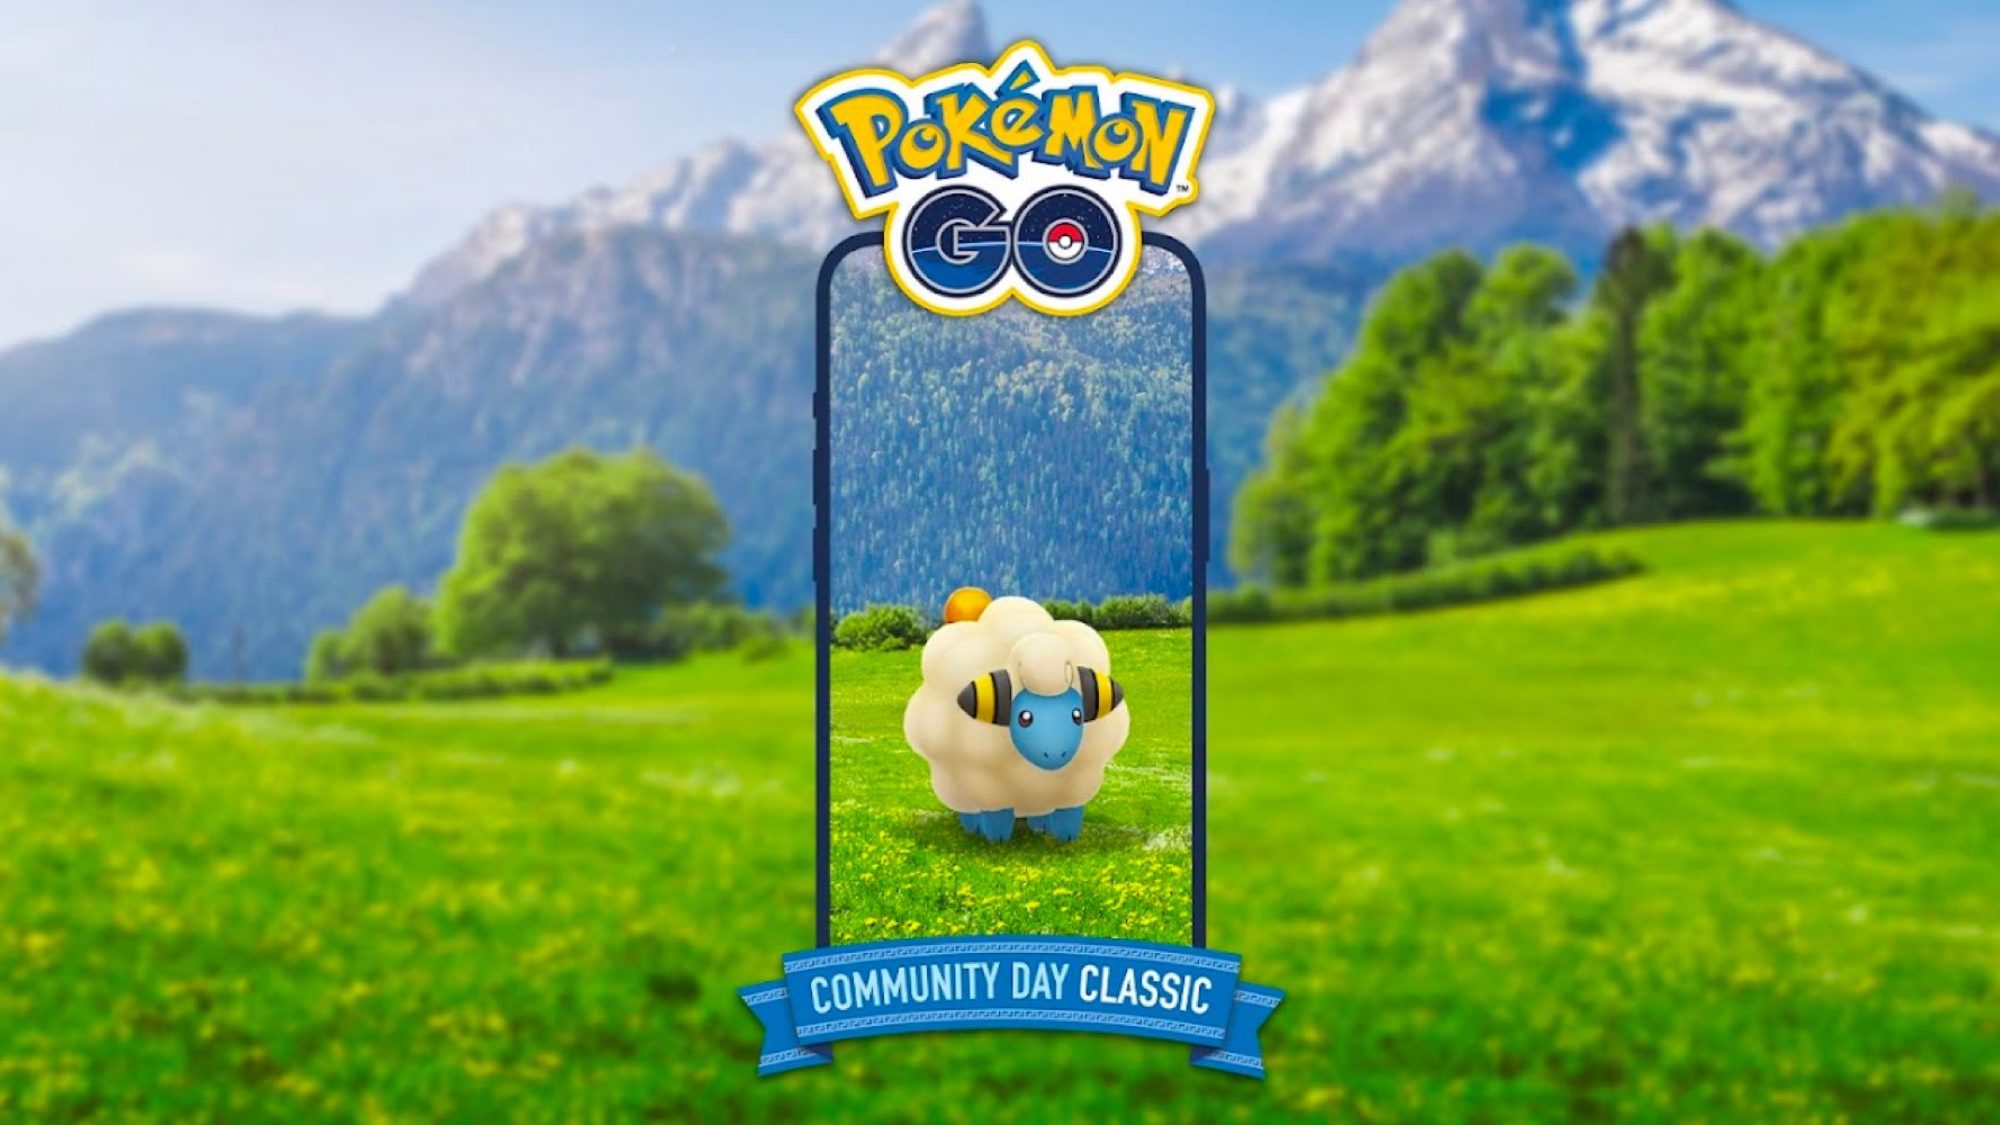 Today Is Mareep Community Day Classic In Pokémon GO